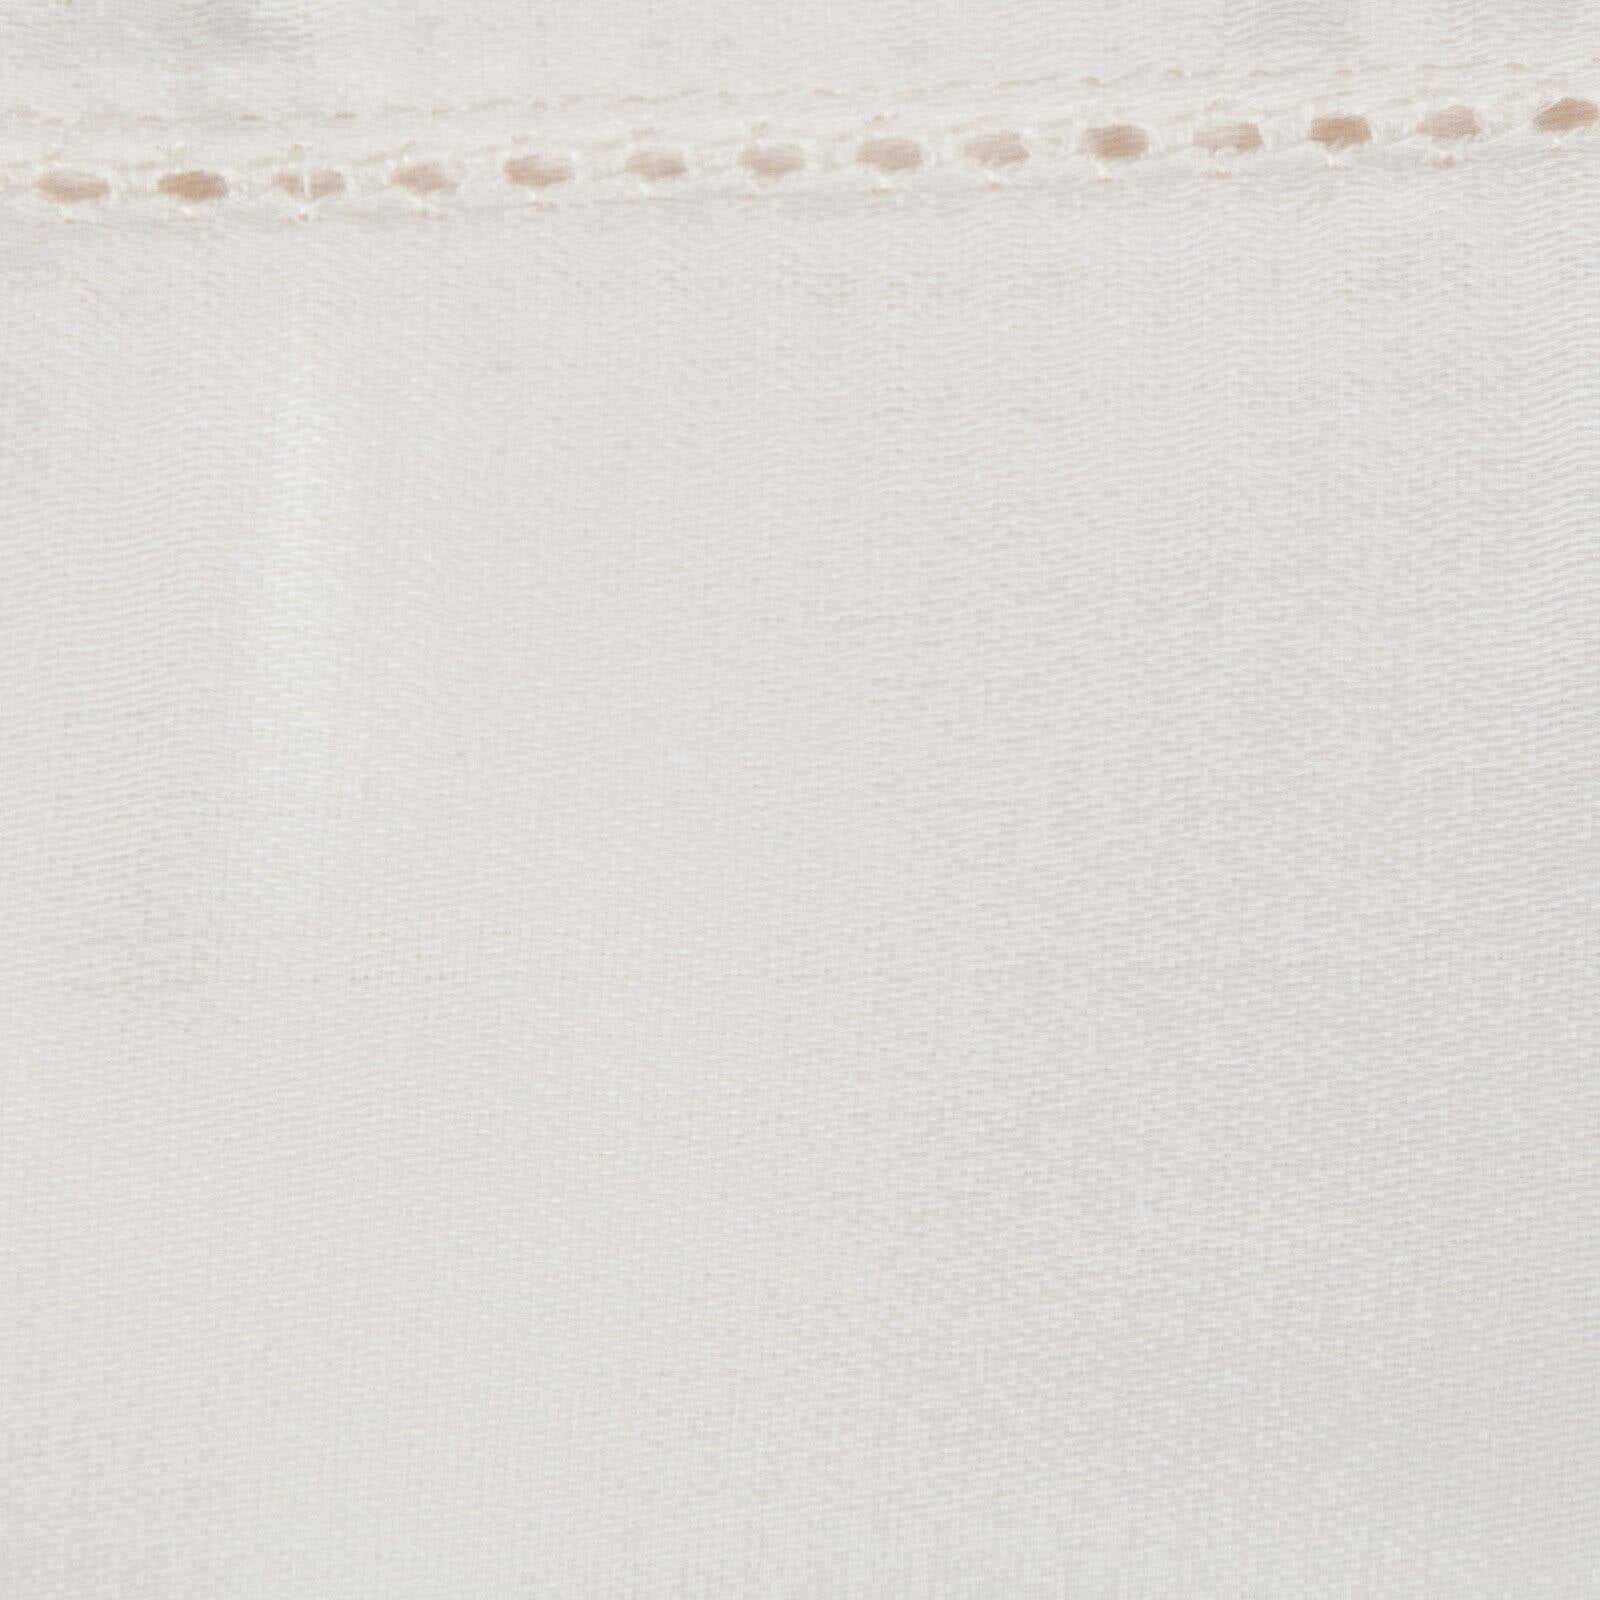 400-Thread Count 100% Egyptian Cotton Bedding Sheets & Pillowcases 